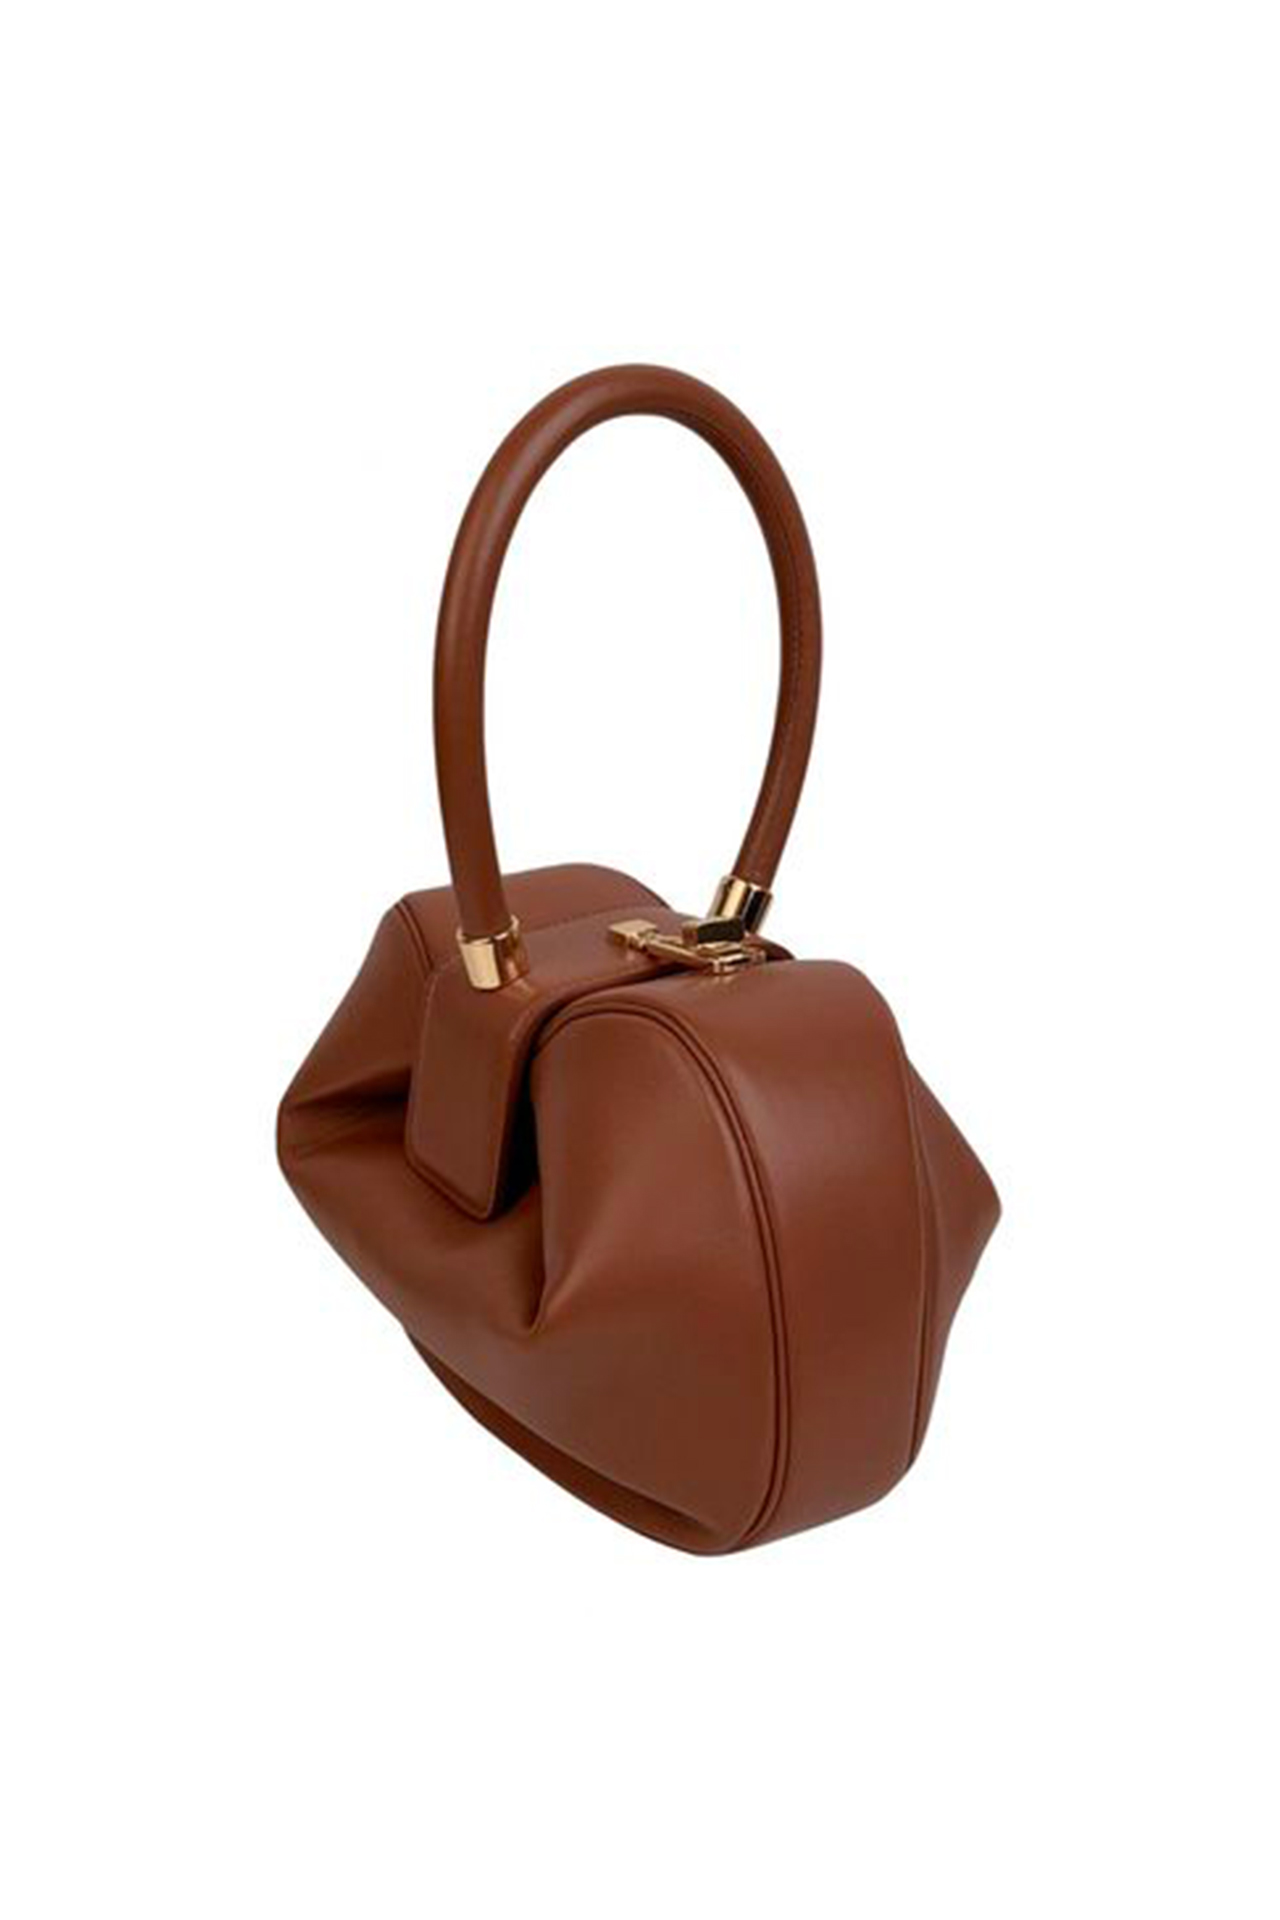 gabriela hearst half beige leather handbag